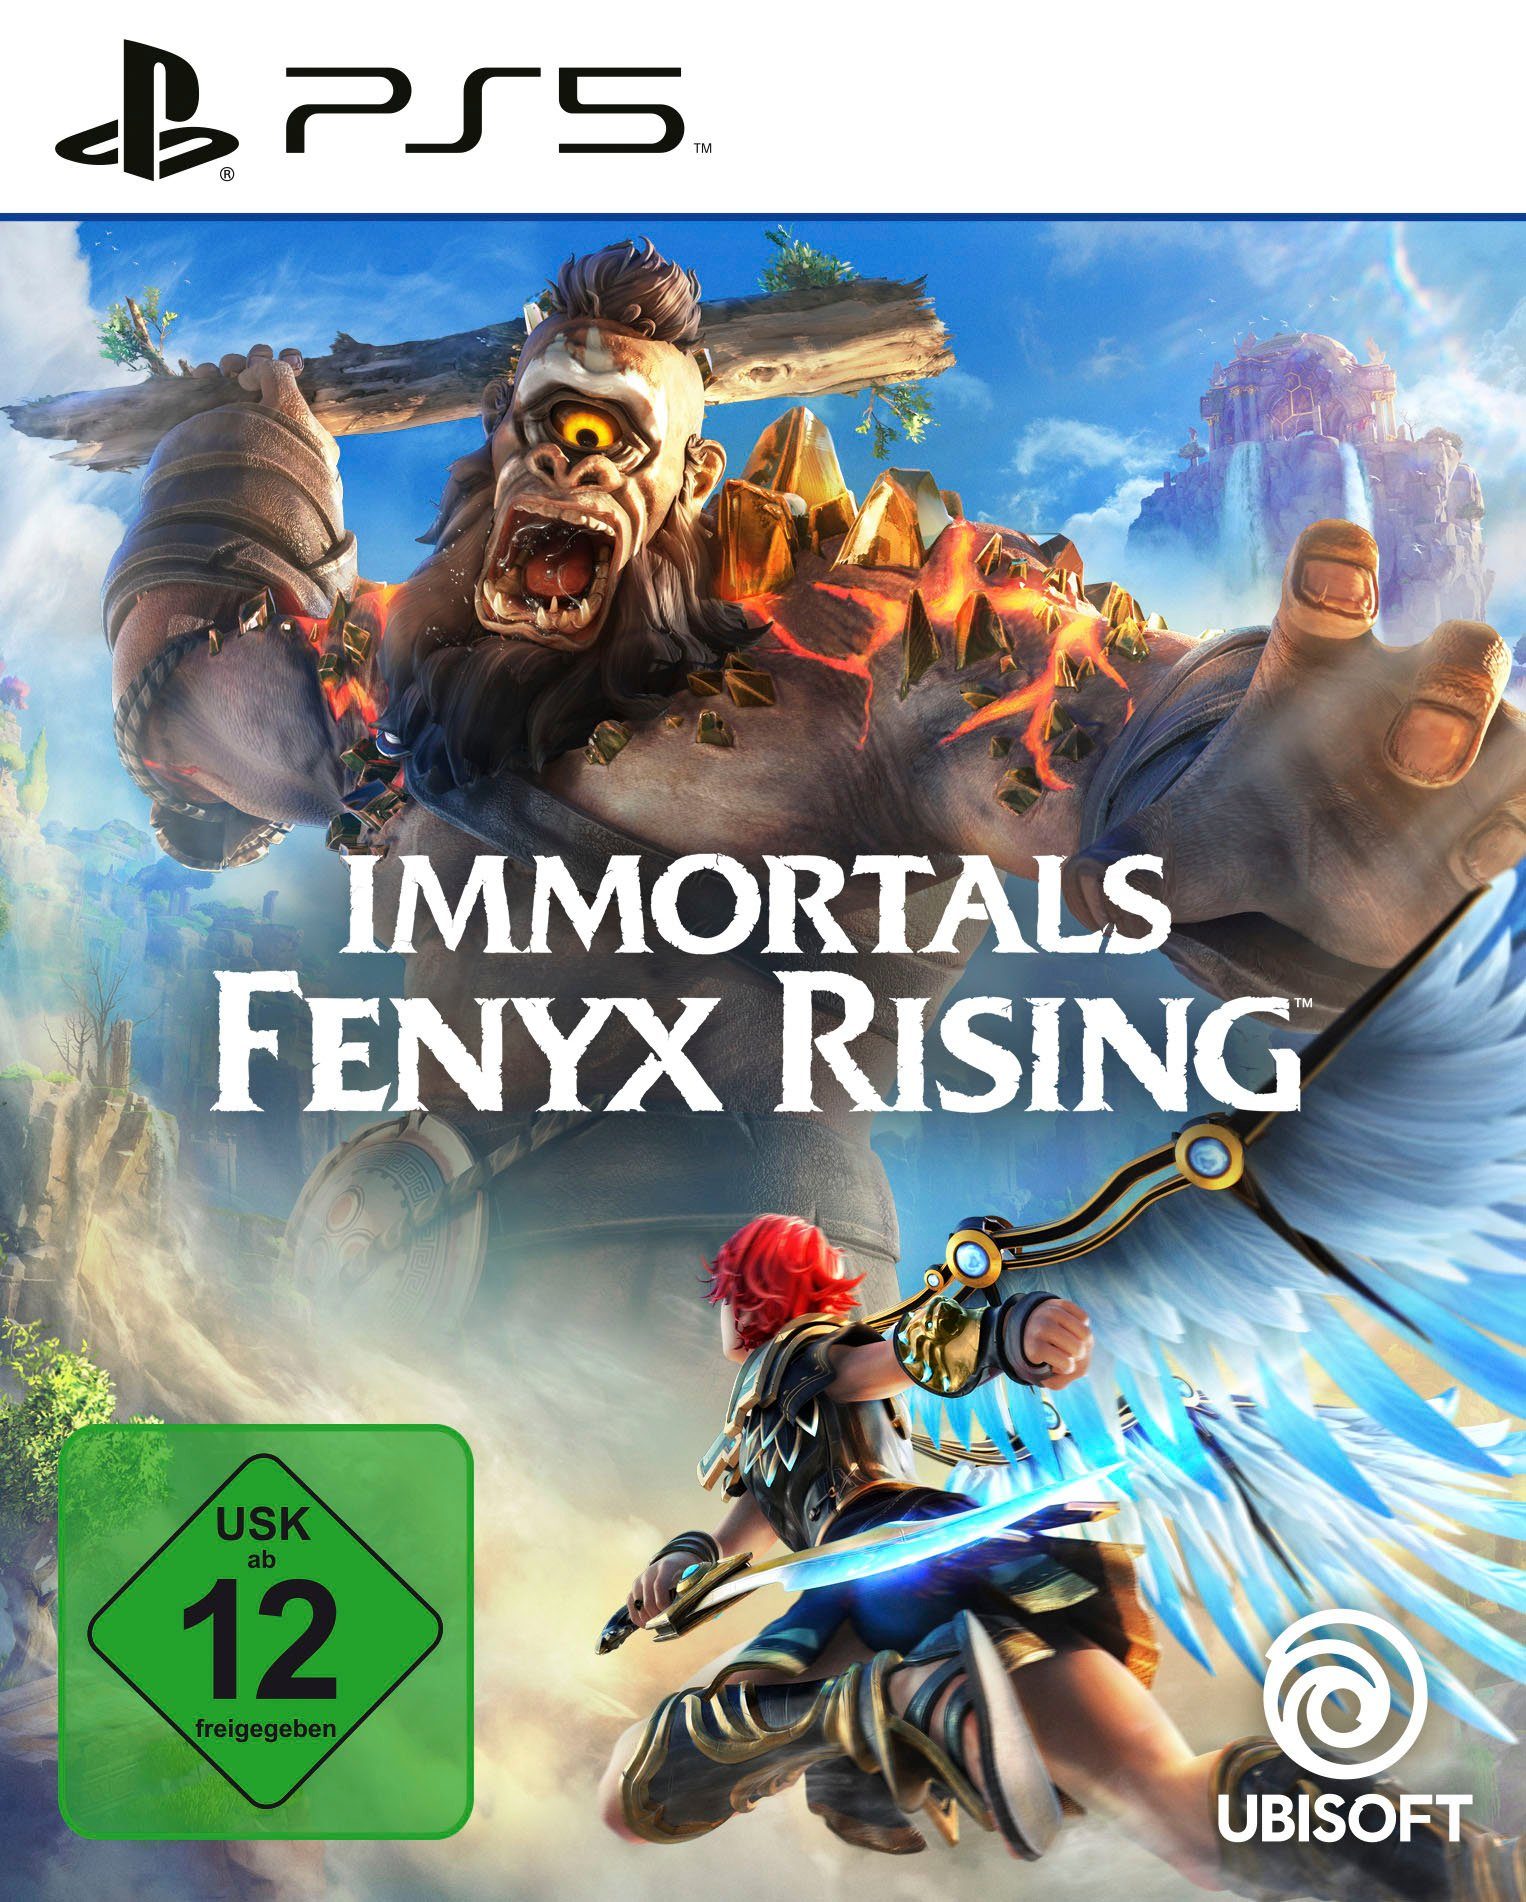 UBISOFT Immortals 5 PlayStation Fenyx Rising